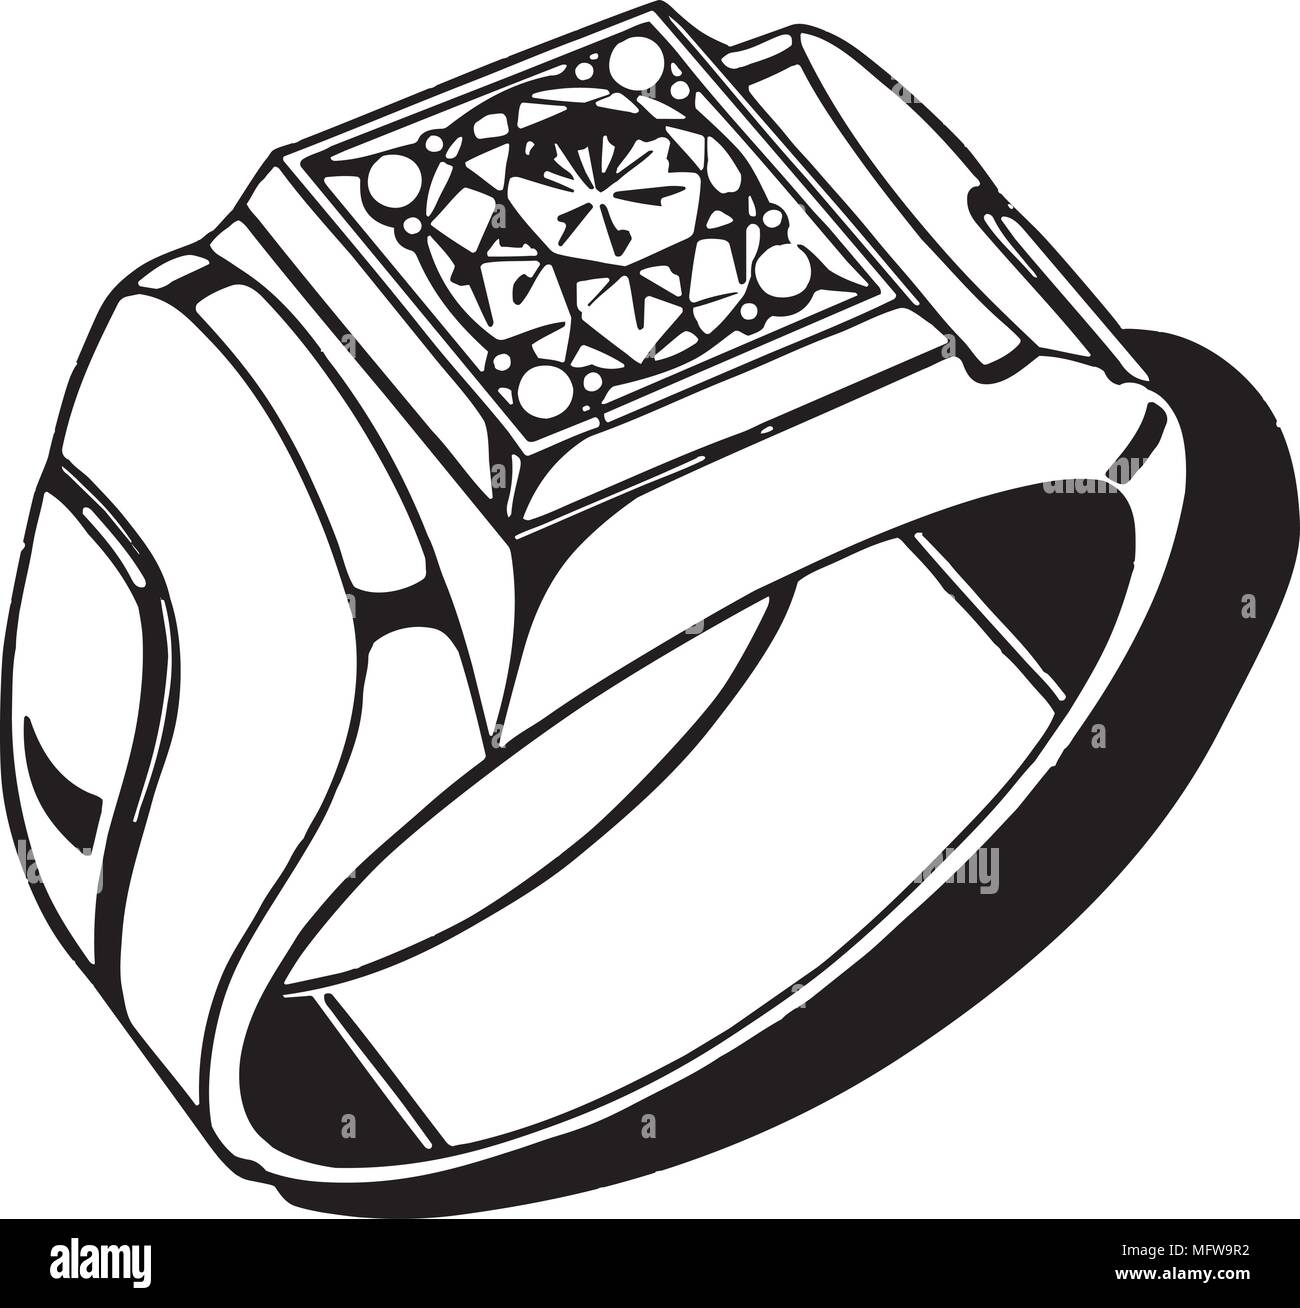 Diamond Engagement Ring Icon Isolated On White Background Stock  Illustration - Download Image Now - iStock